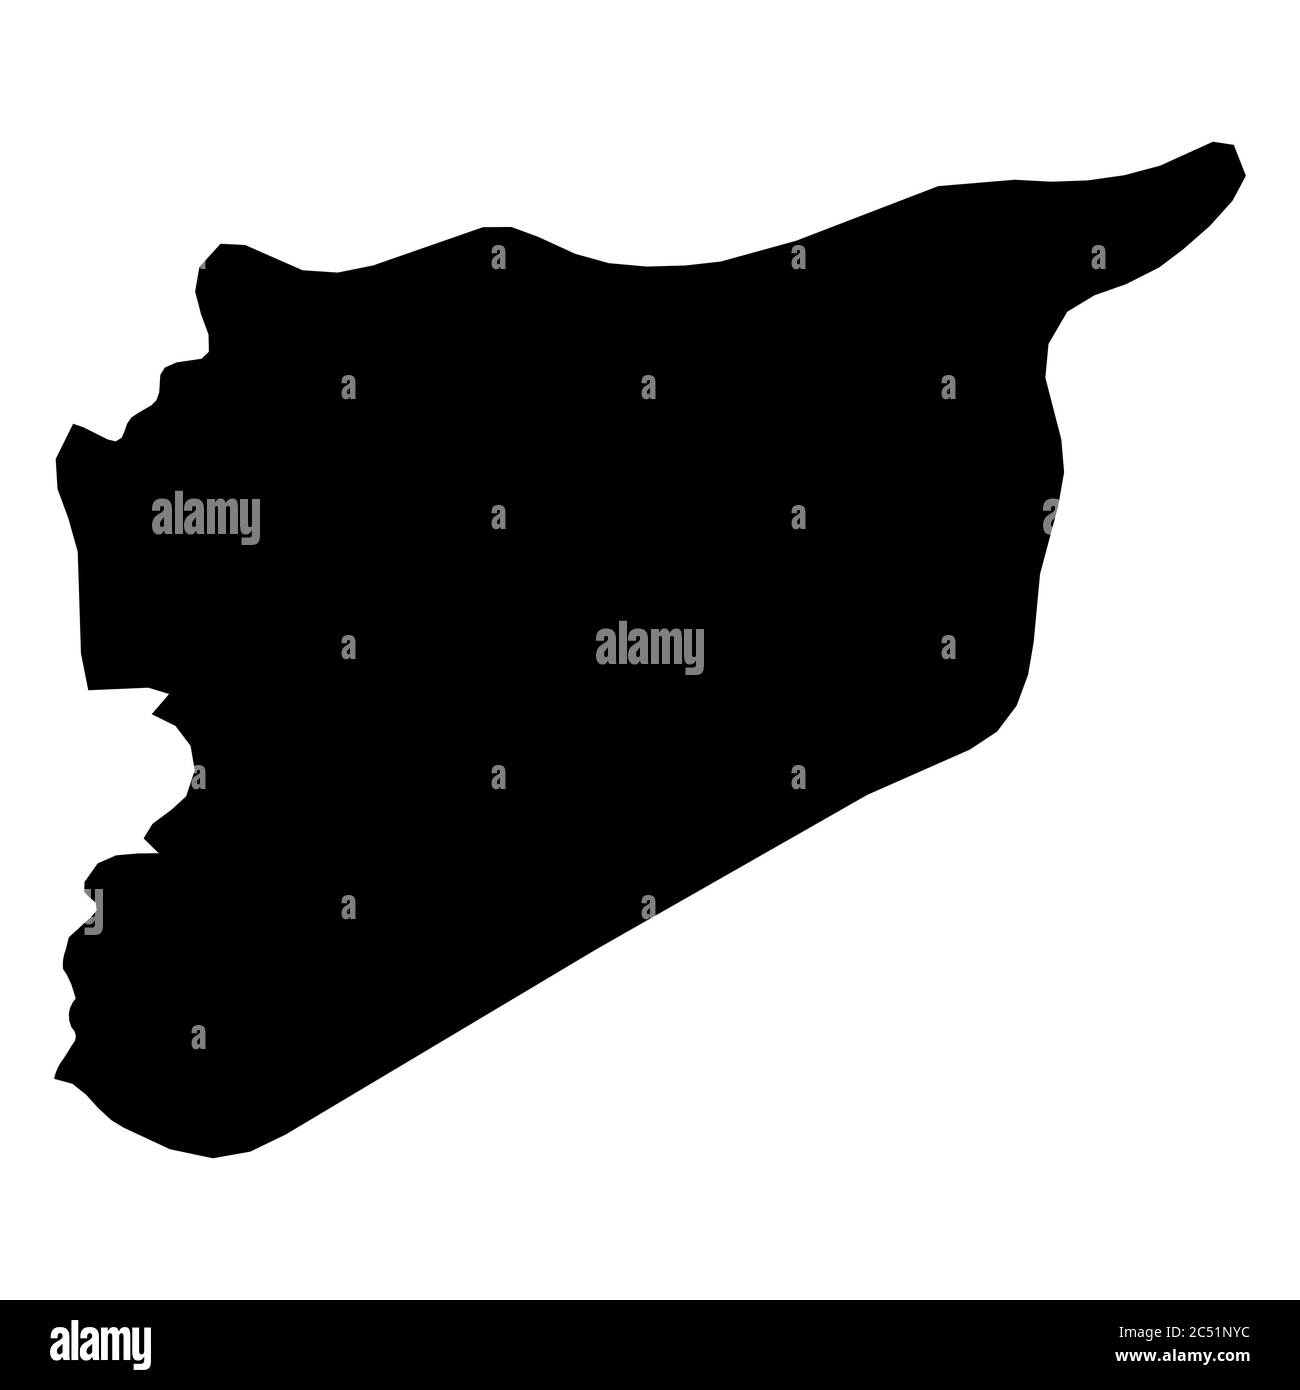 Siria Mapa De Silueta Negro S Lido De La Zona Del Pa S Ilustraci N Simple De Vector Plano